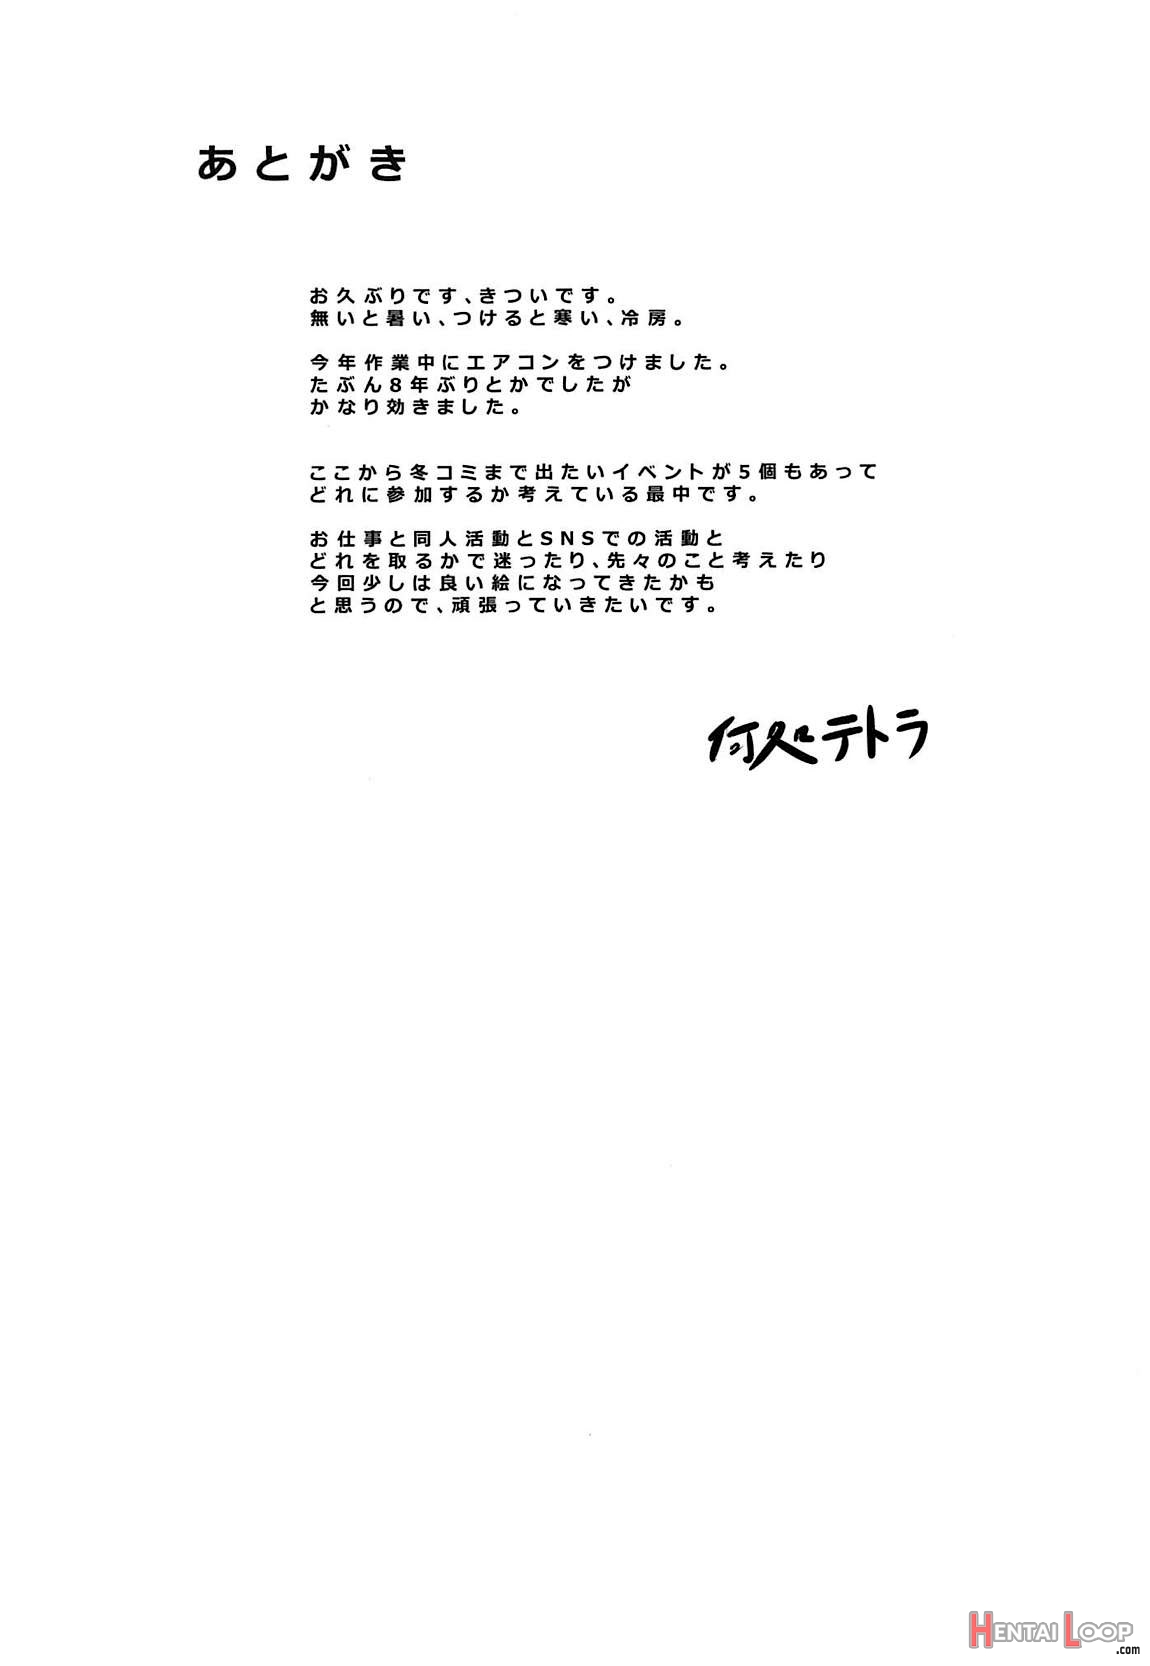 Ningyouki -san- page 16